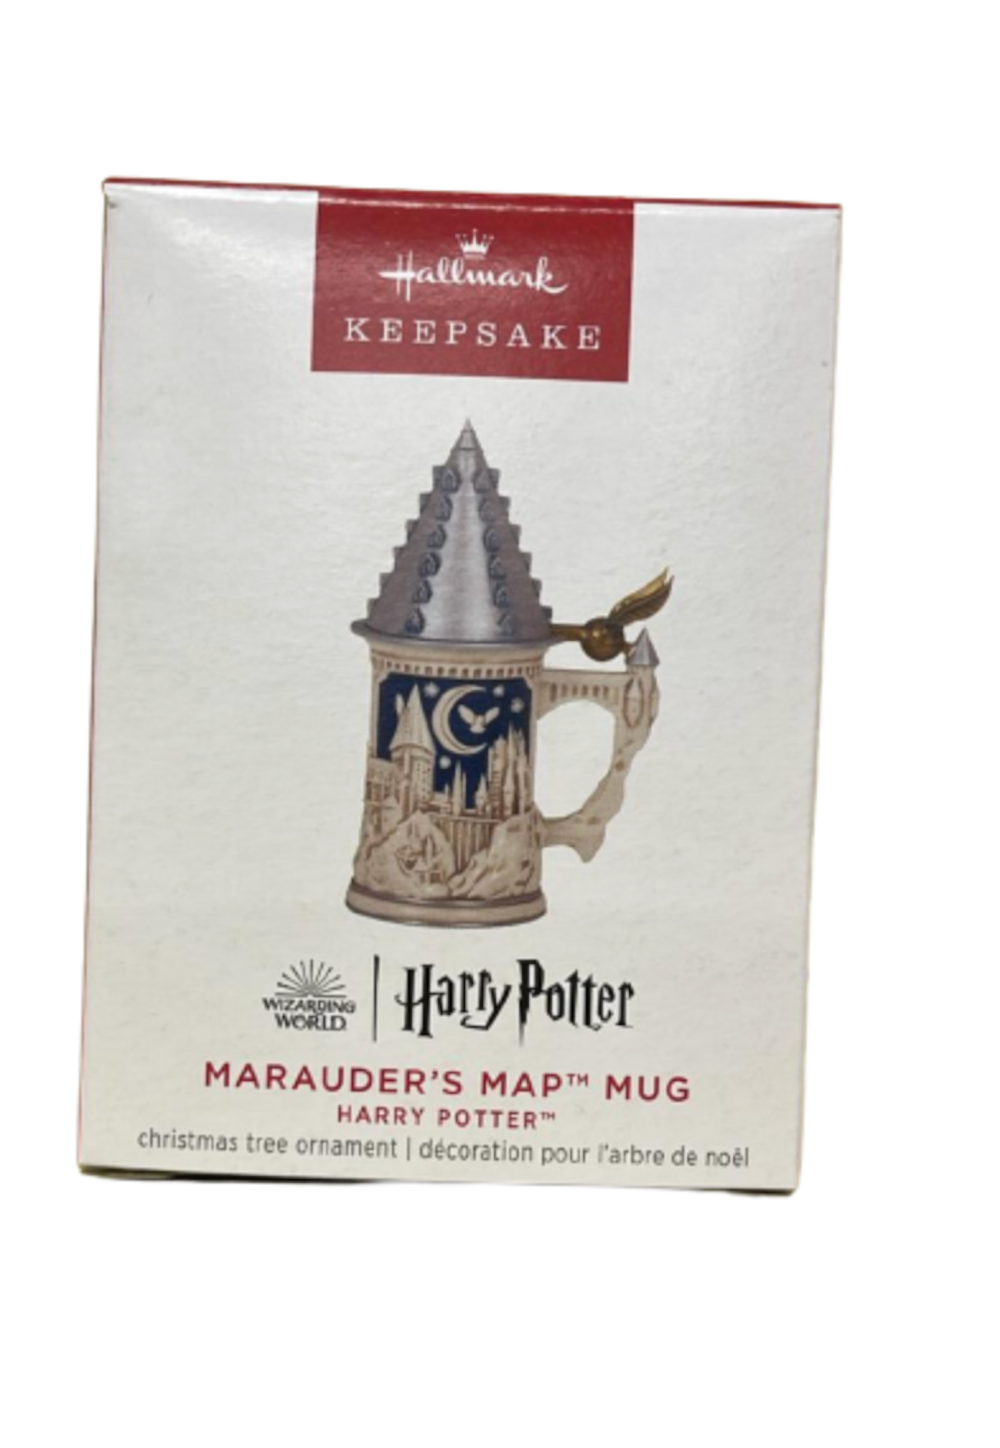 Hallmark 2023 Keepsake Harry Potter Marauder's Map Mug Ornament New with Box